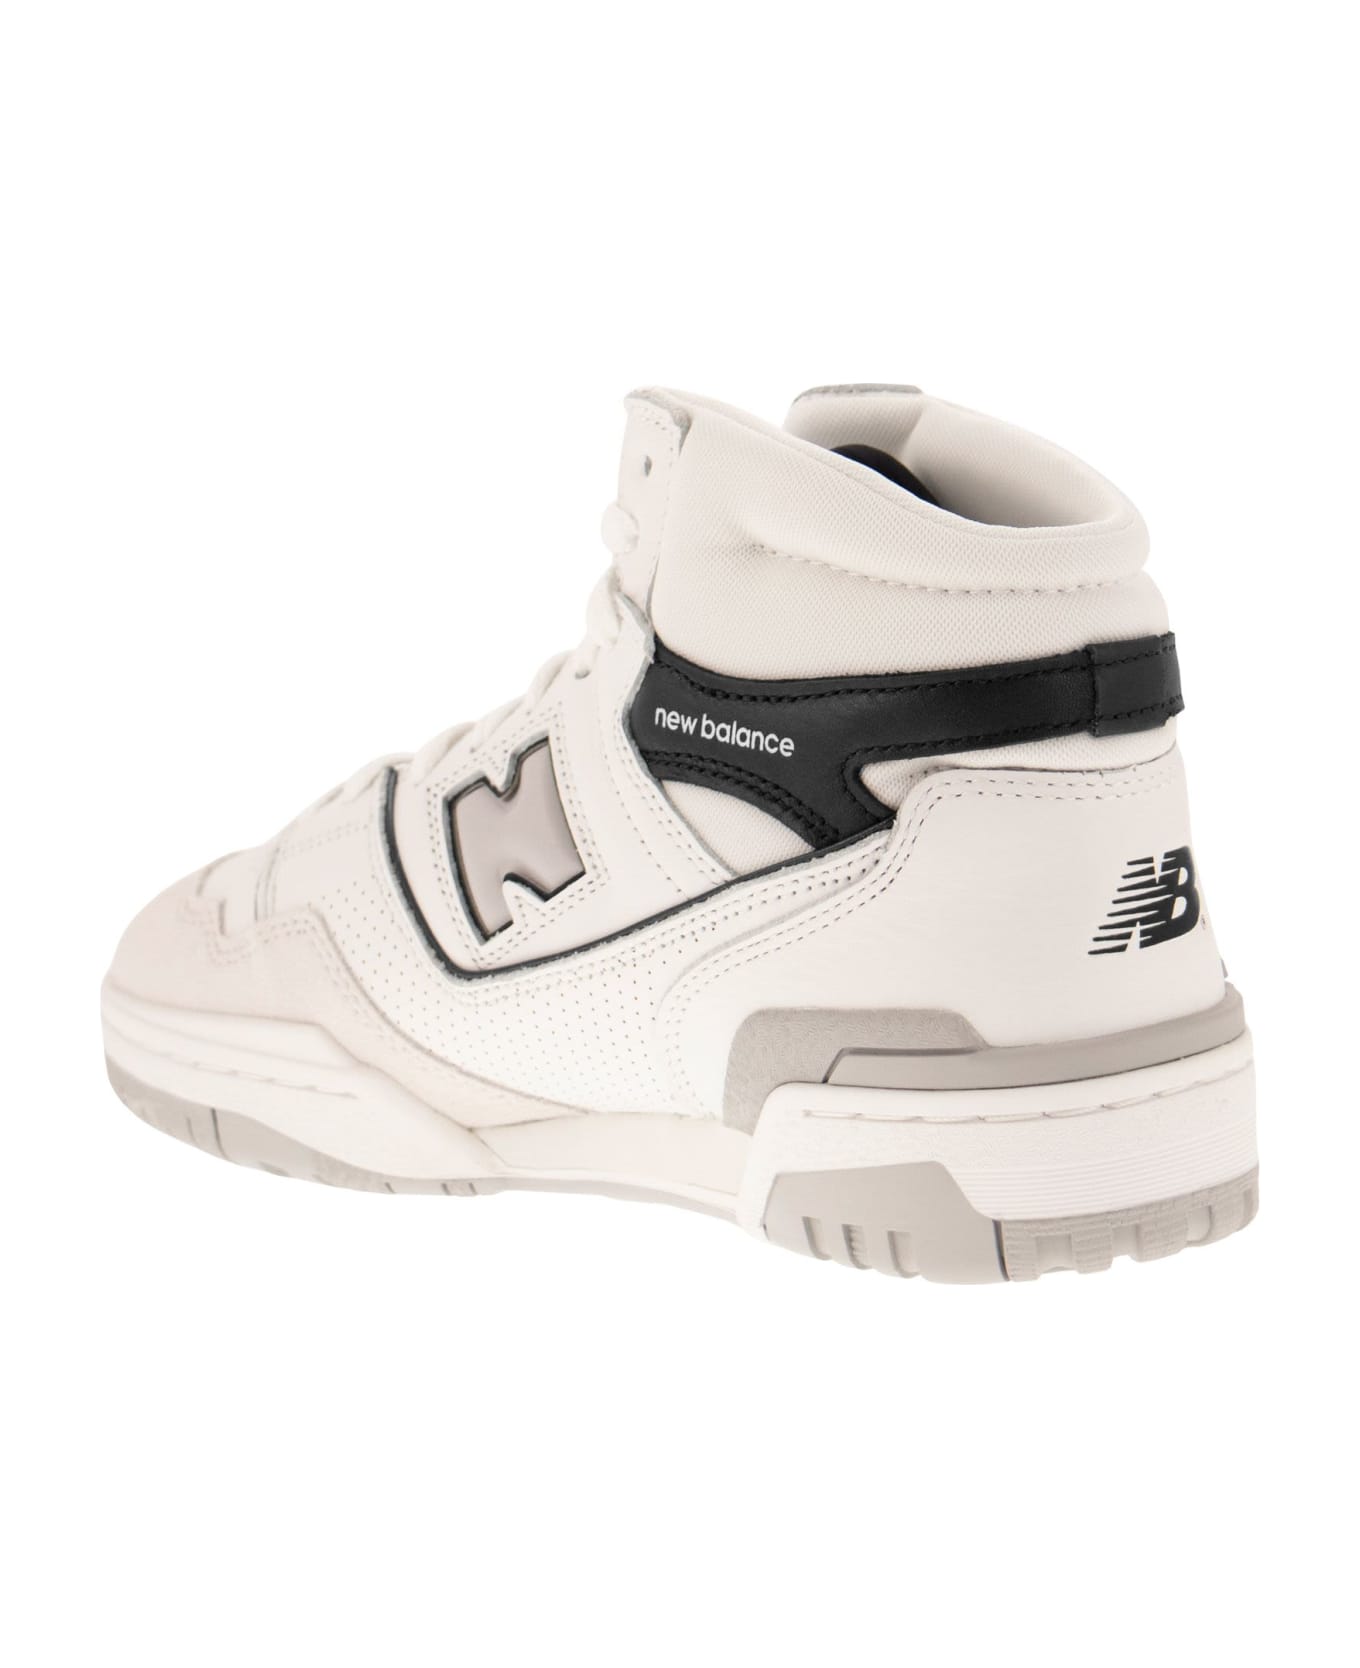 New Balance Bb650 - Sneakers - White